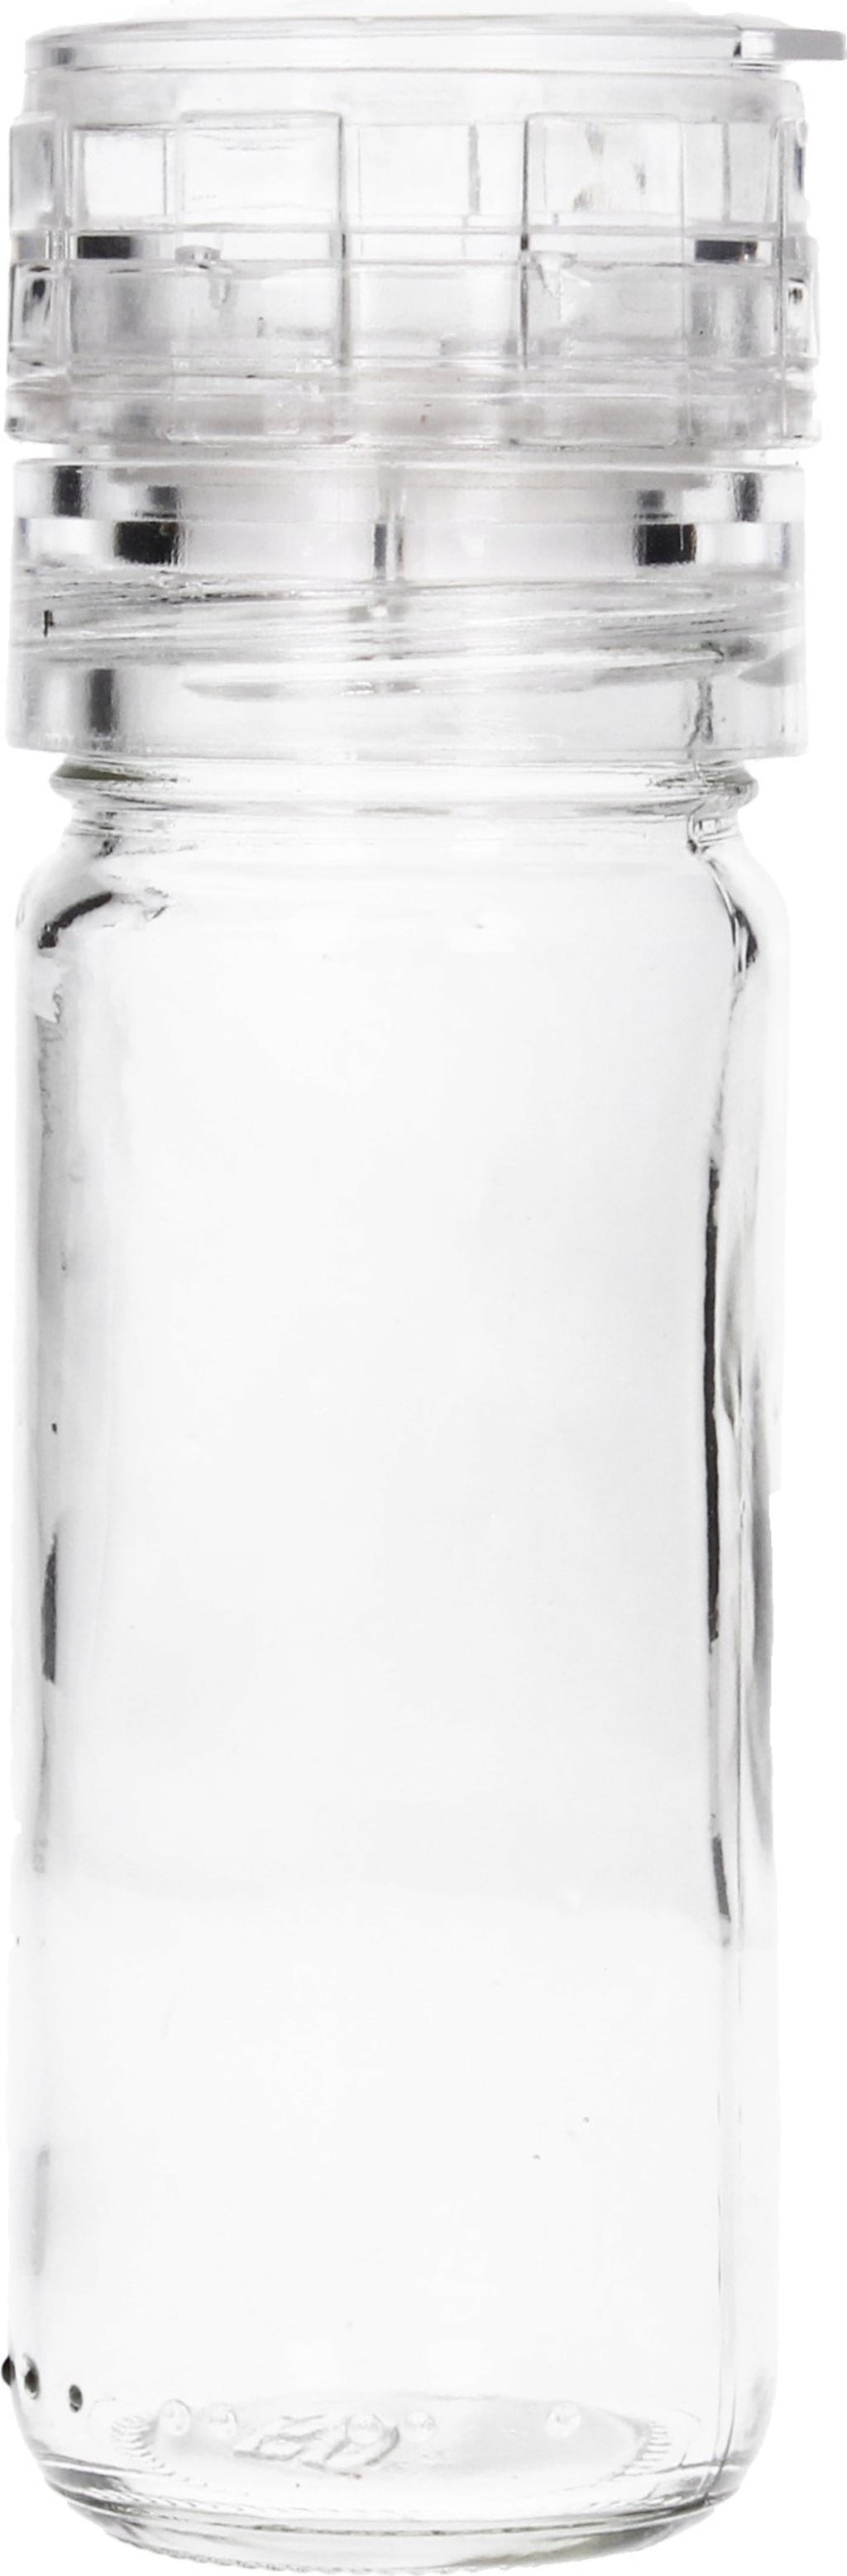 Bioenergie Gewürzmühle aus Glas - 1 Stk